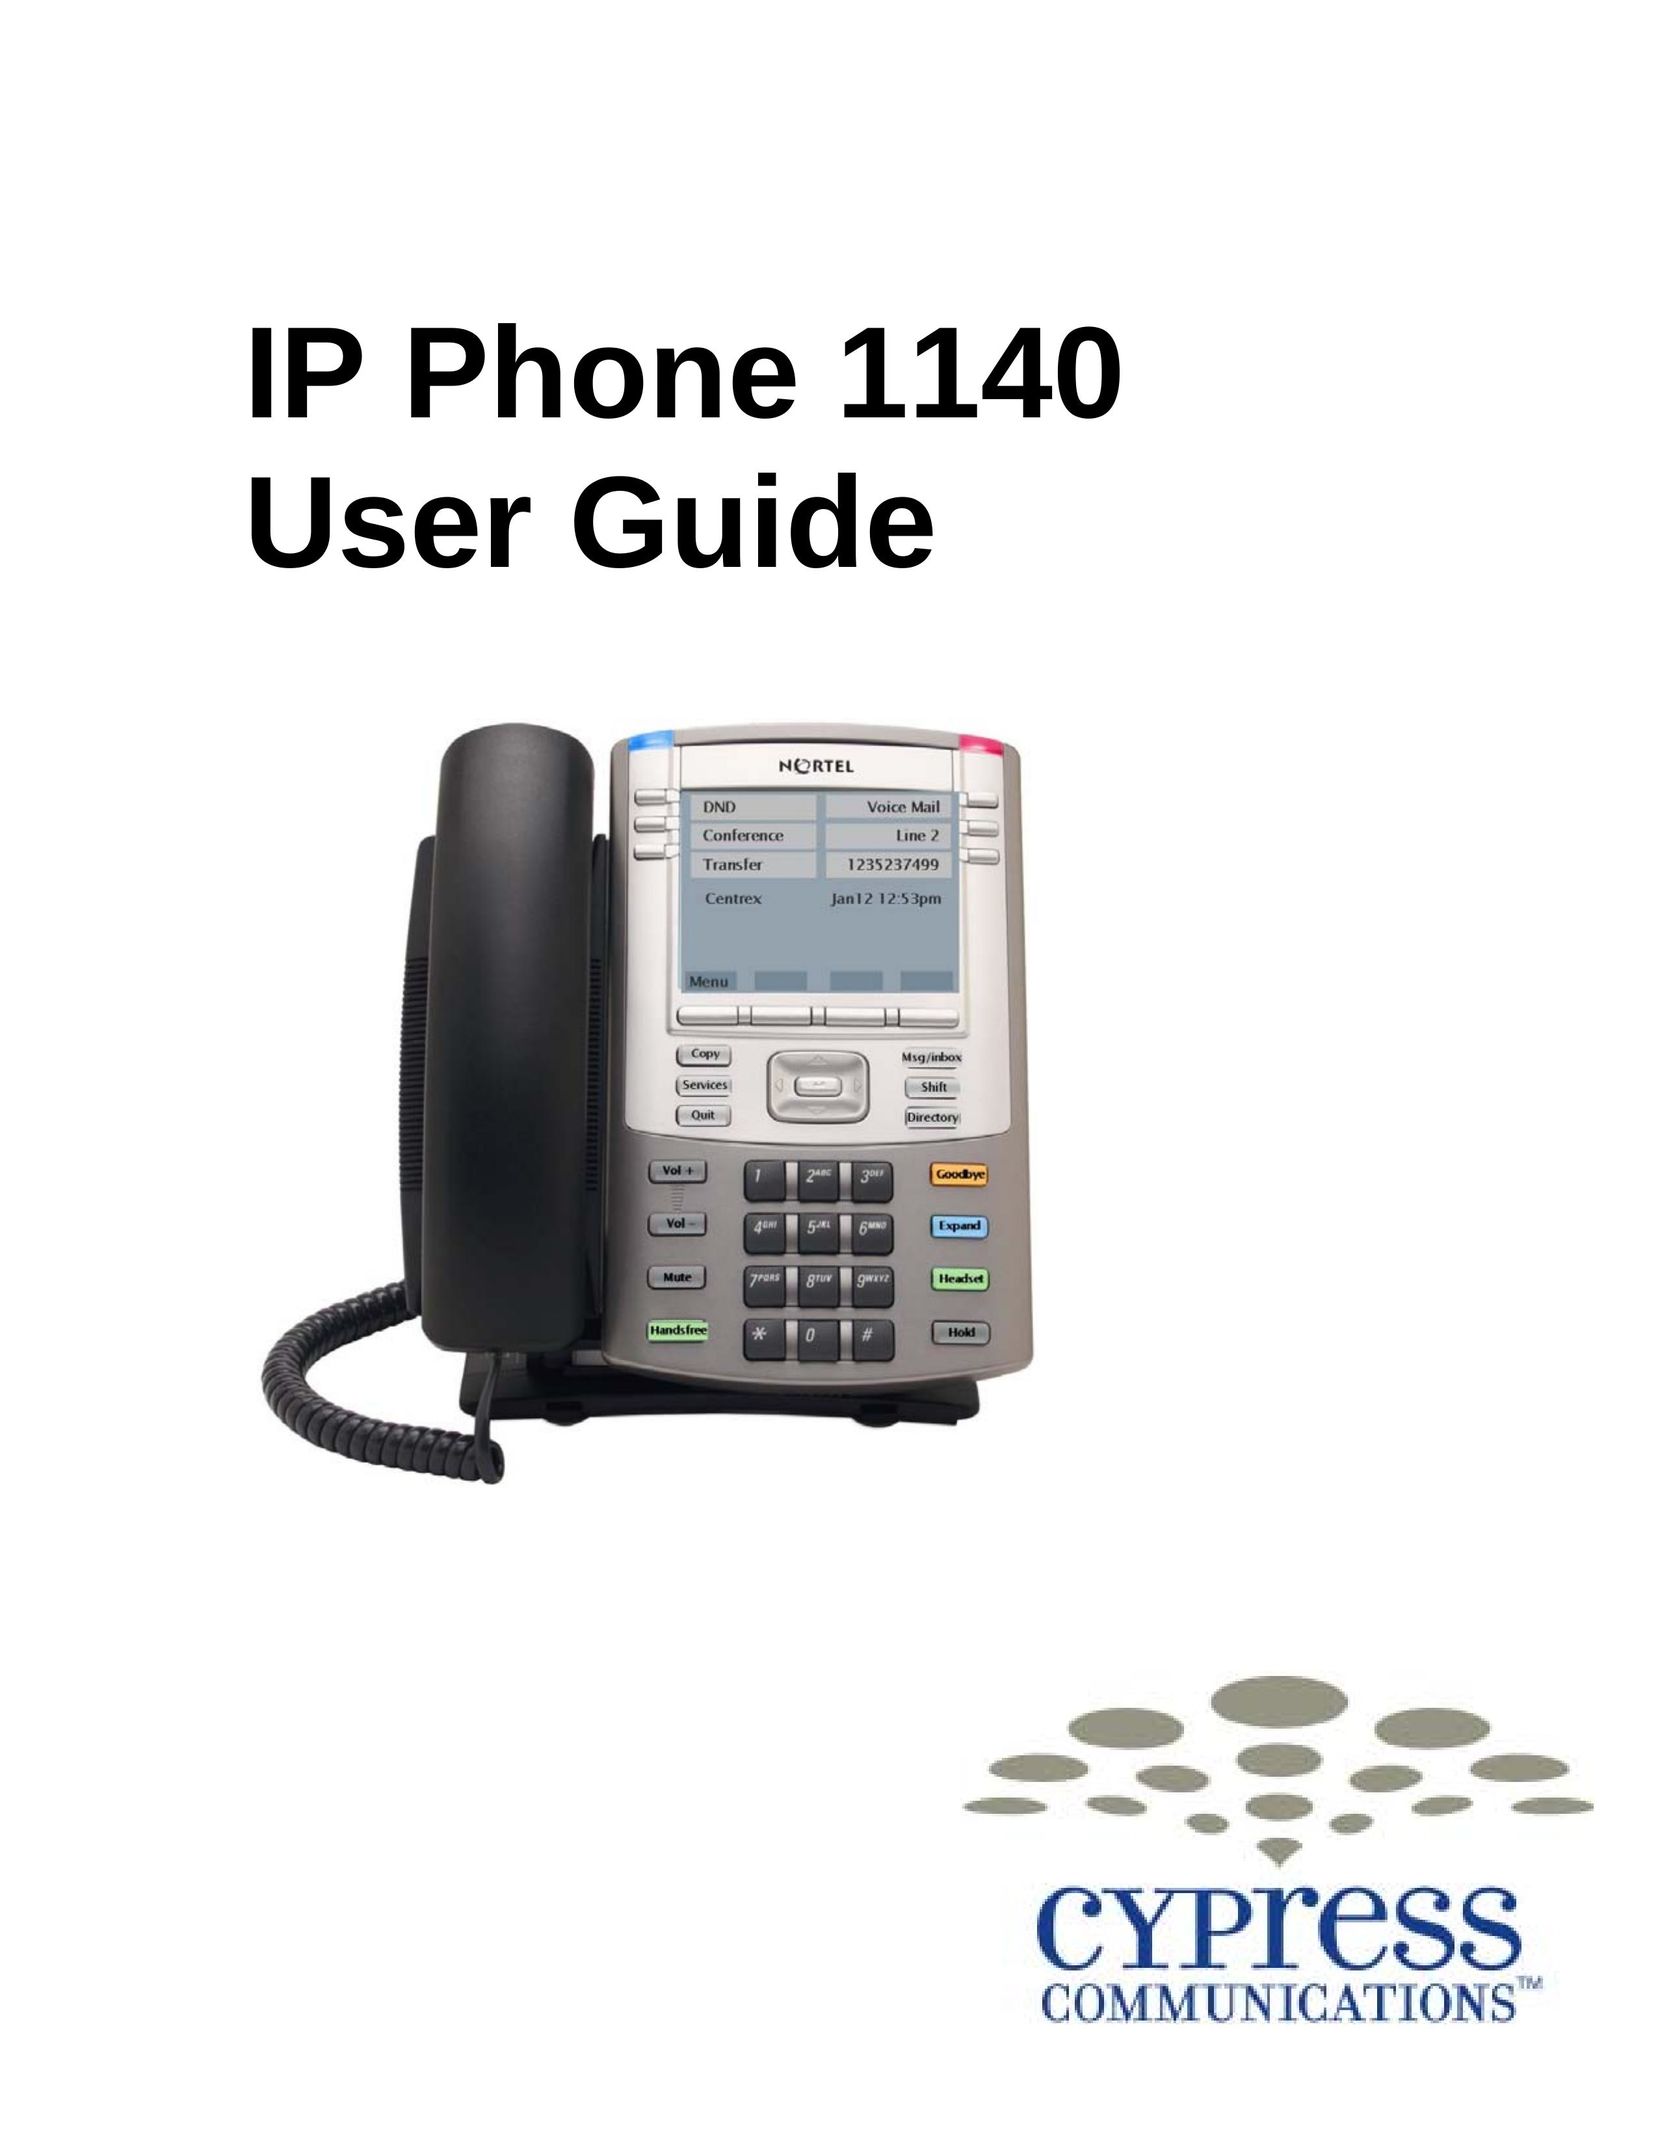 Cypress 1140 IP Phone User Manual (Page 1)